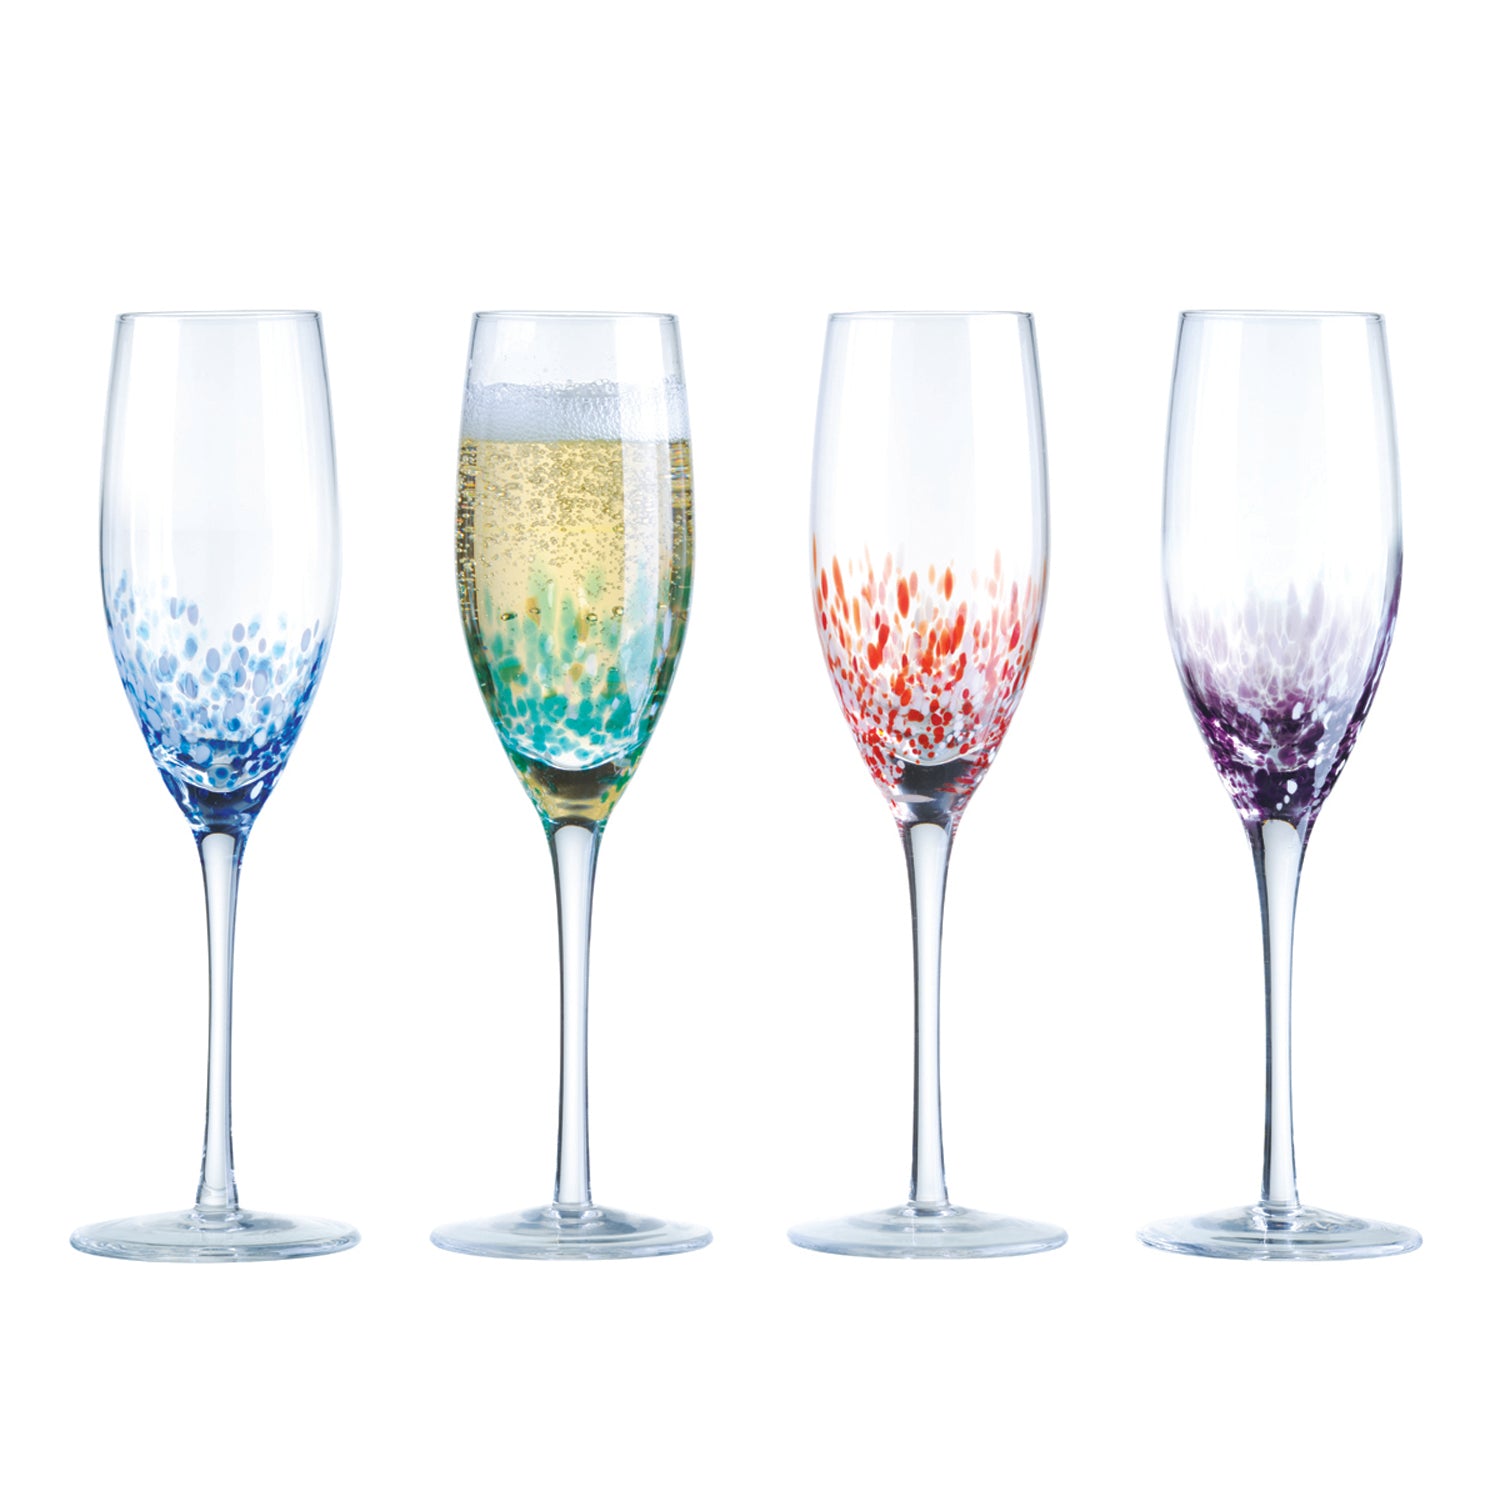 Anton Studio Designs Speckle Champagne Flutes, Set of 4